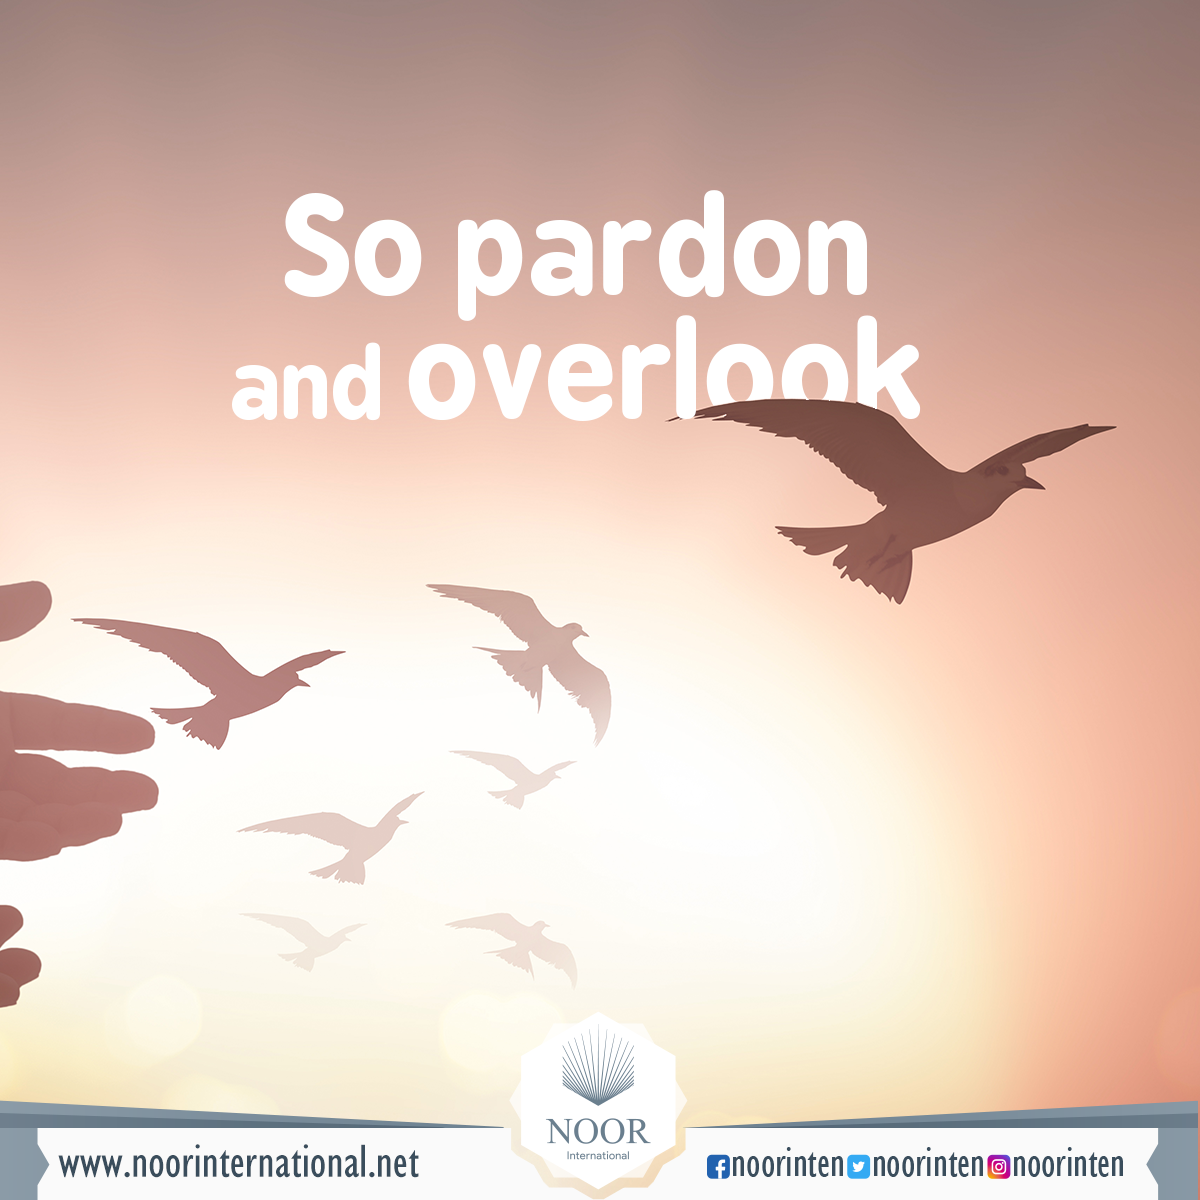 So pardon and overlook